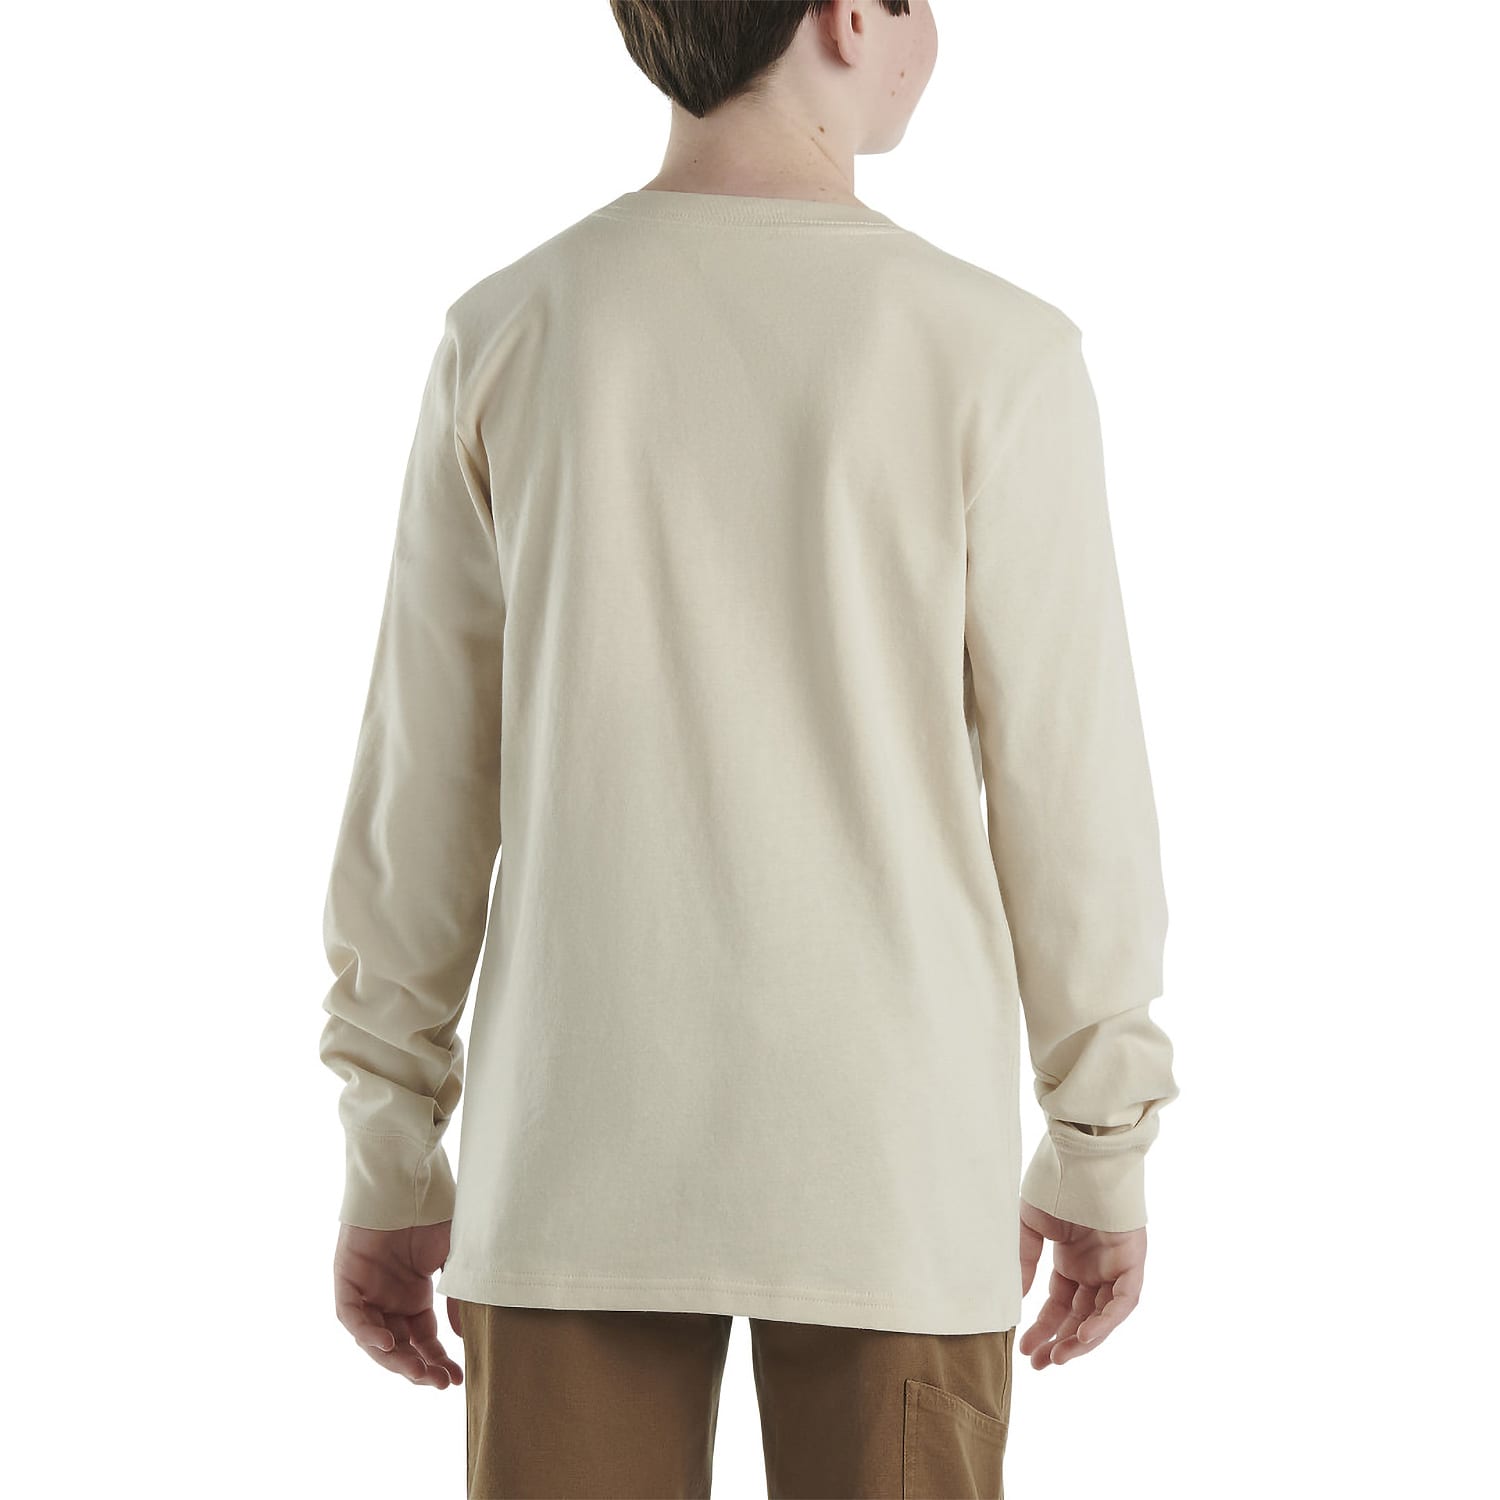 Carhartt® Boys’ Long-Sleeve Graphic T-Shirt